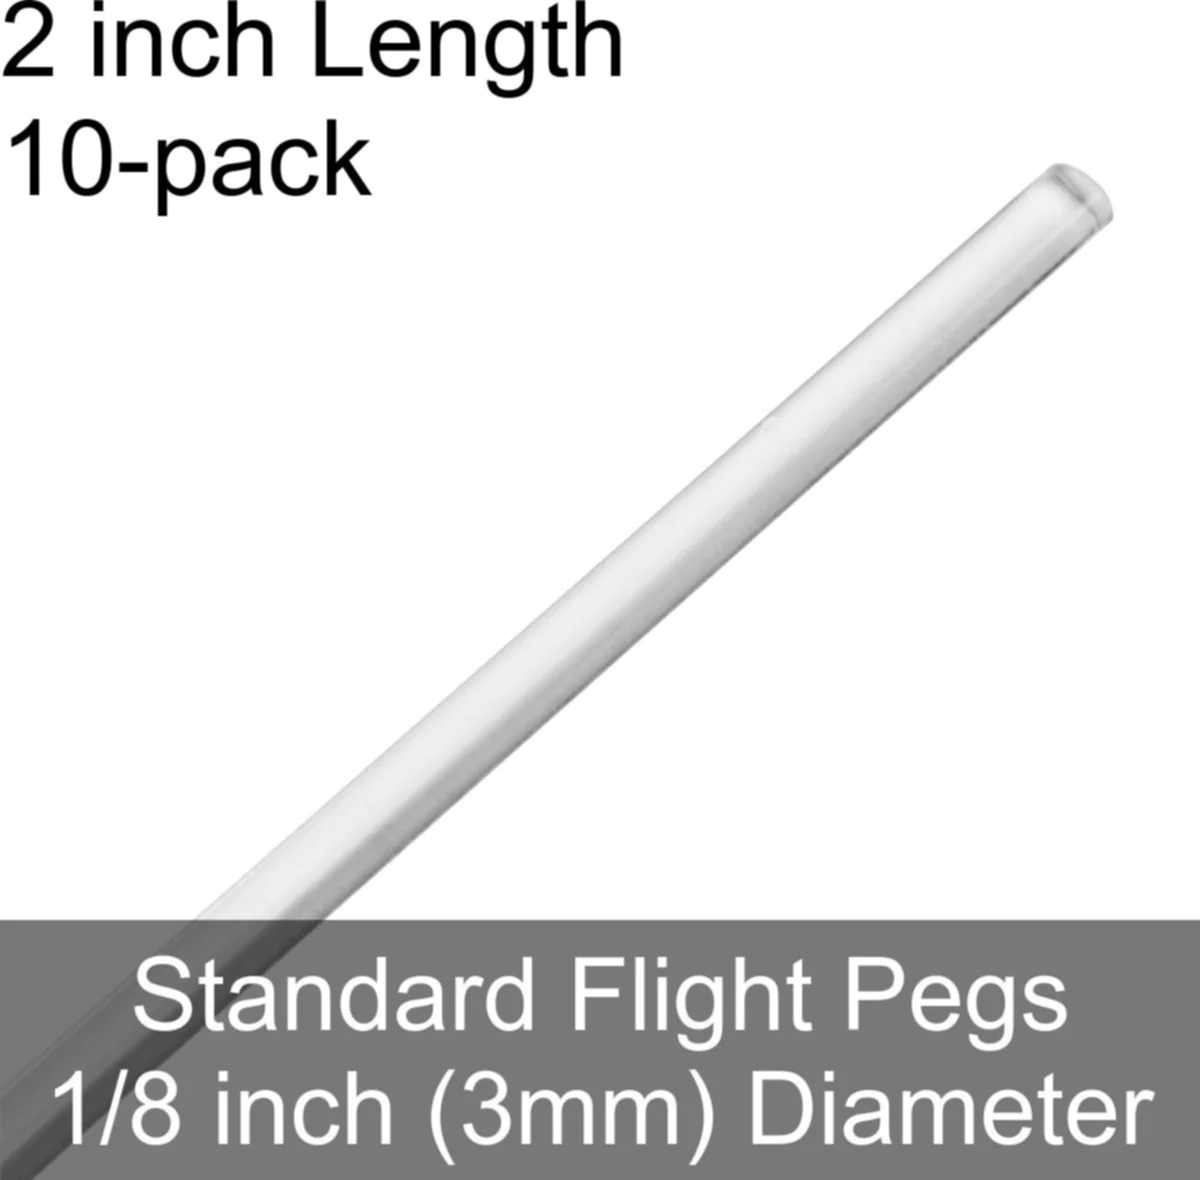 Standard Flight Pegs, 2.0 Inch Length (10)